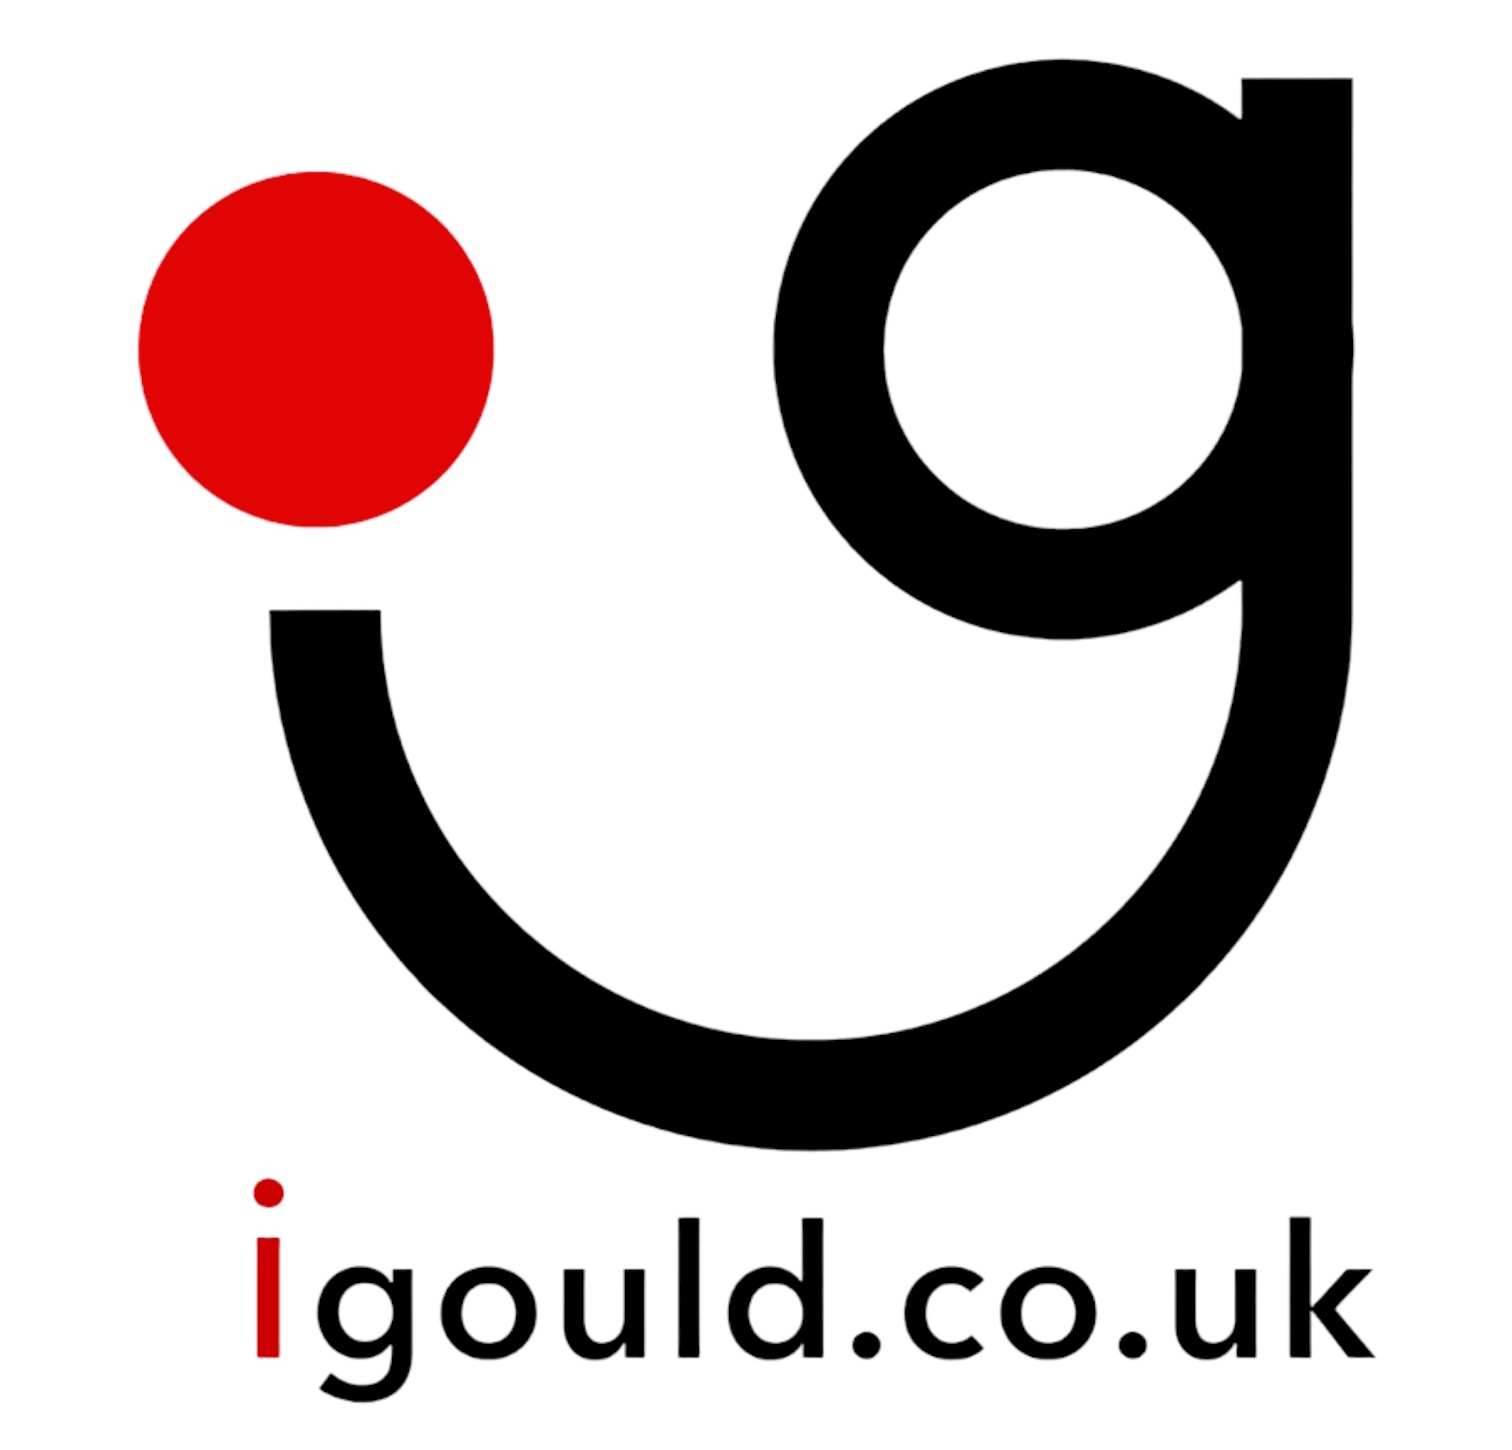 Gould.co.uk